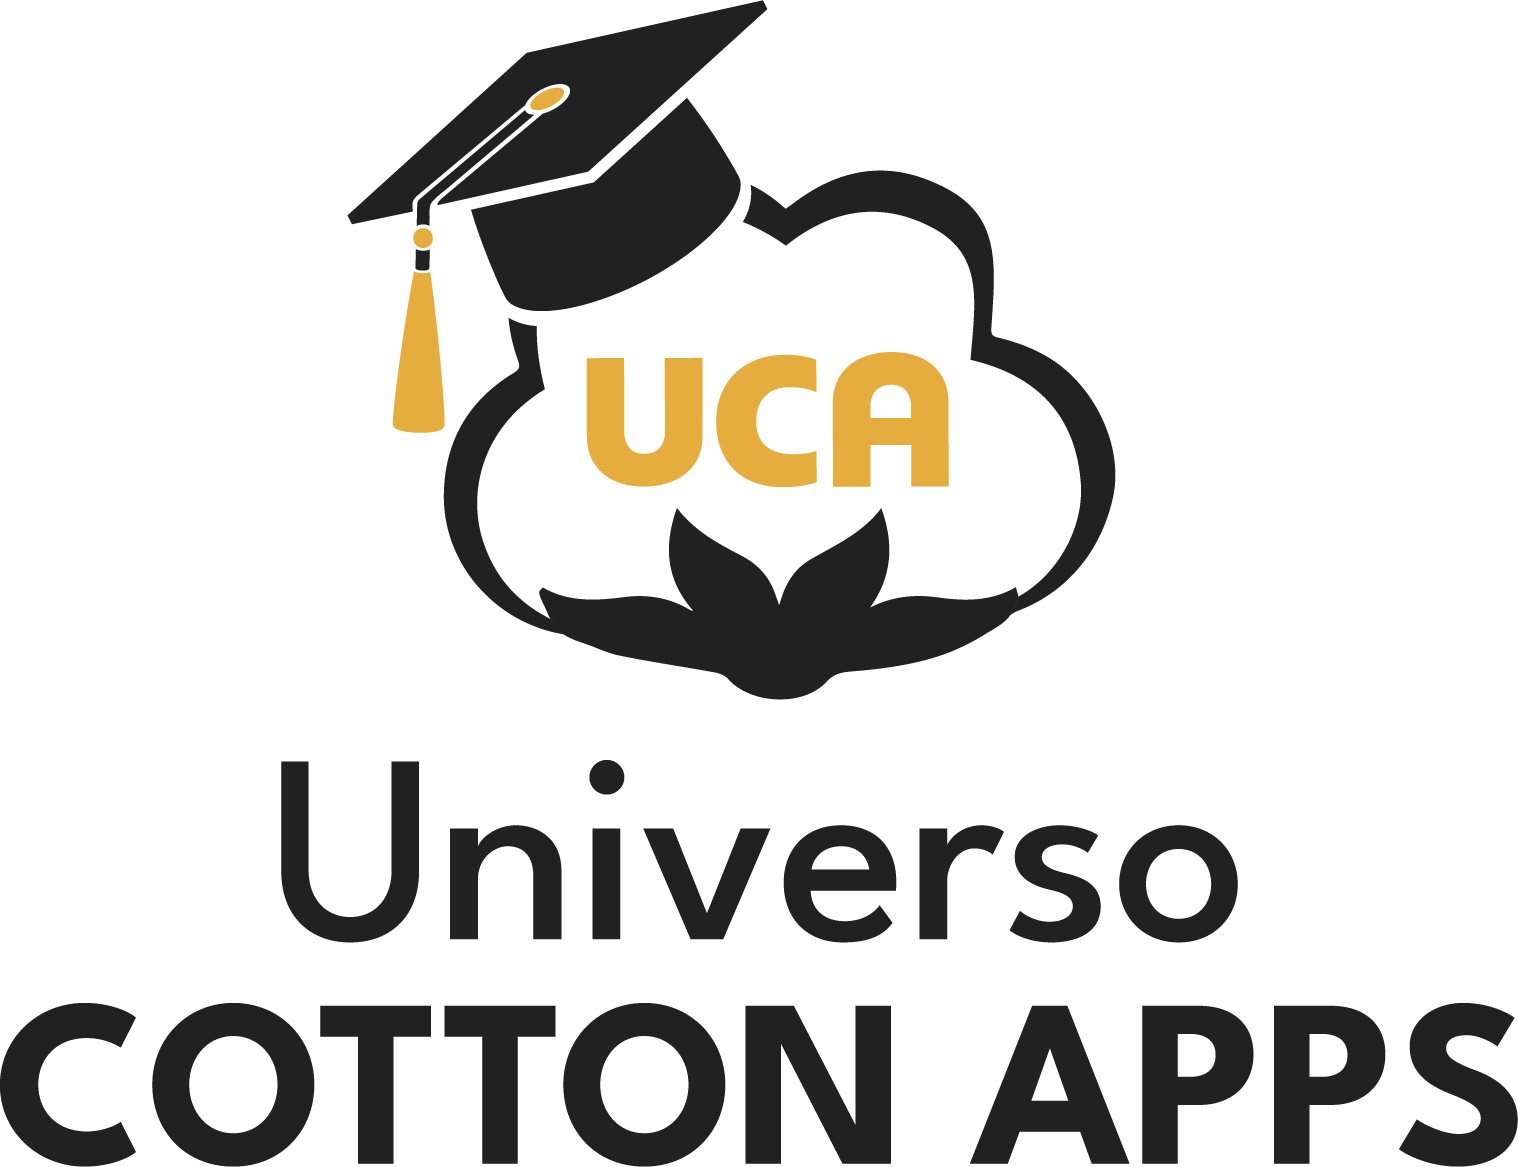 universo cotton apps